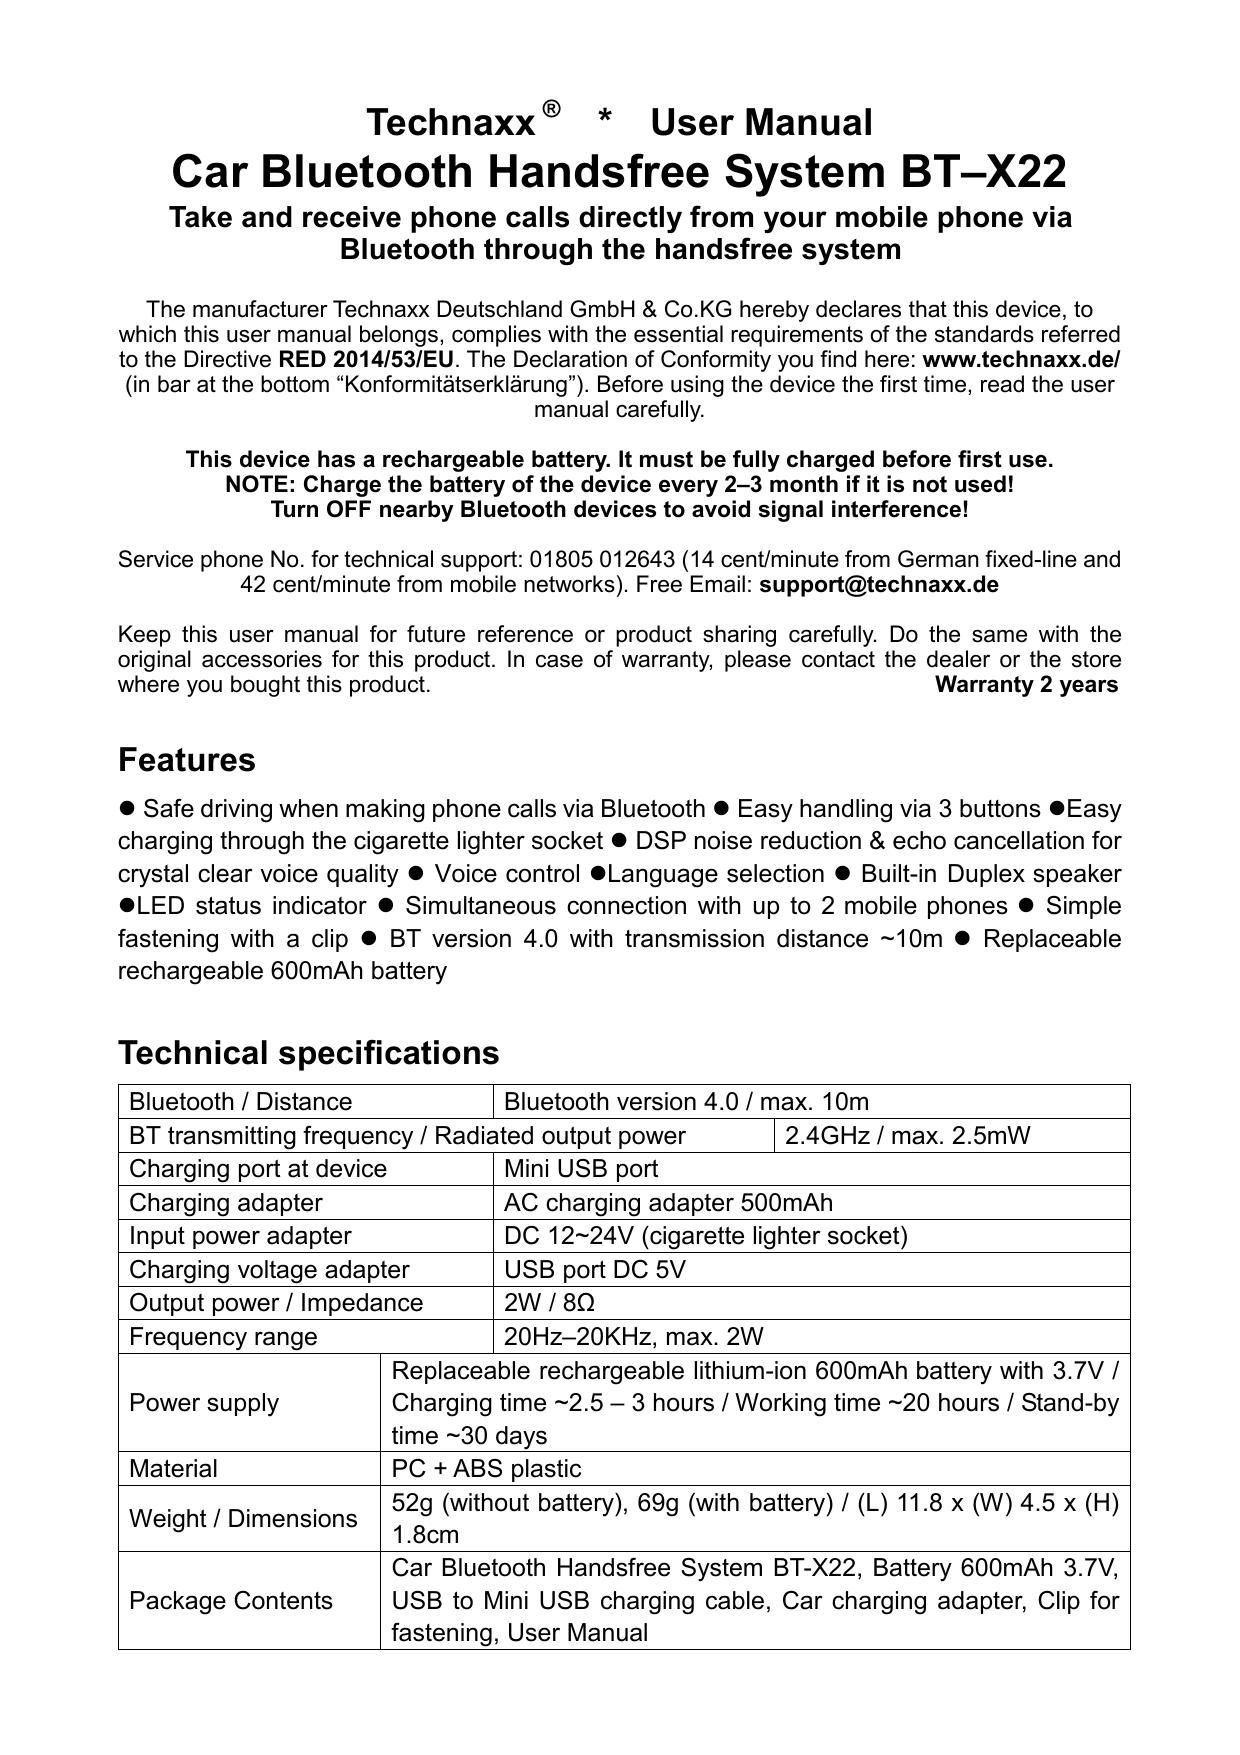 Technaxx BT-X22 Car Bluetooth Handsfree System Owner's Manual | Manualzz